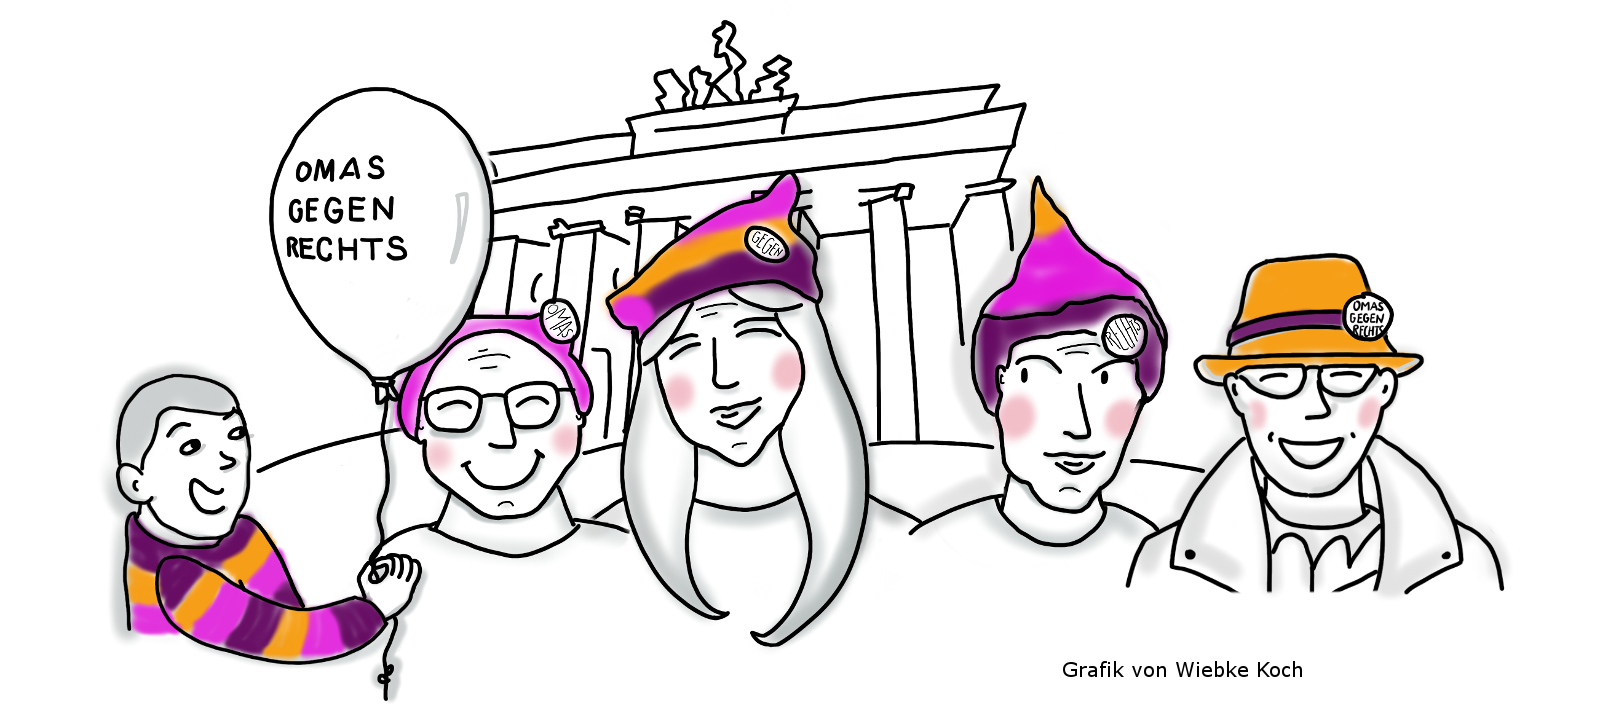 OMAS GEGEN RECHTS Berlin - Grafik von Wiebke Koch